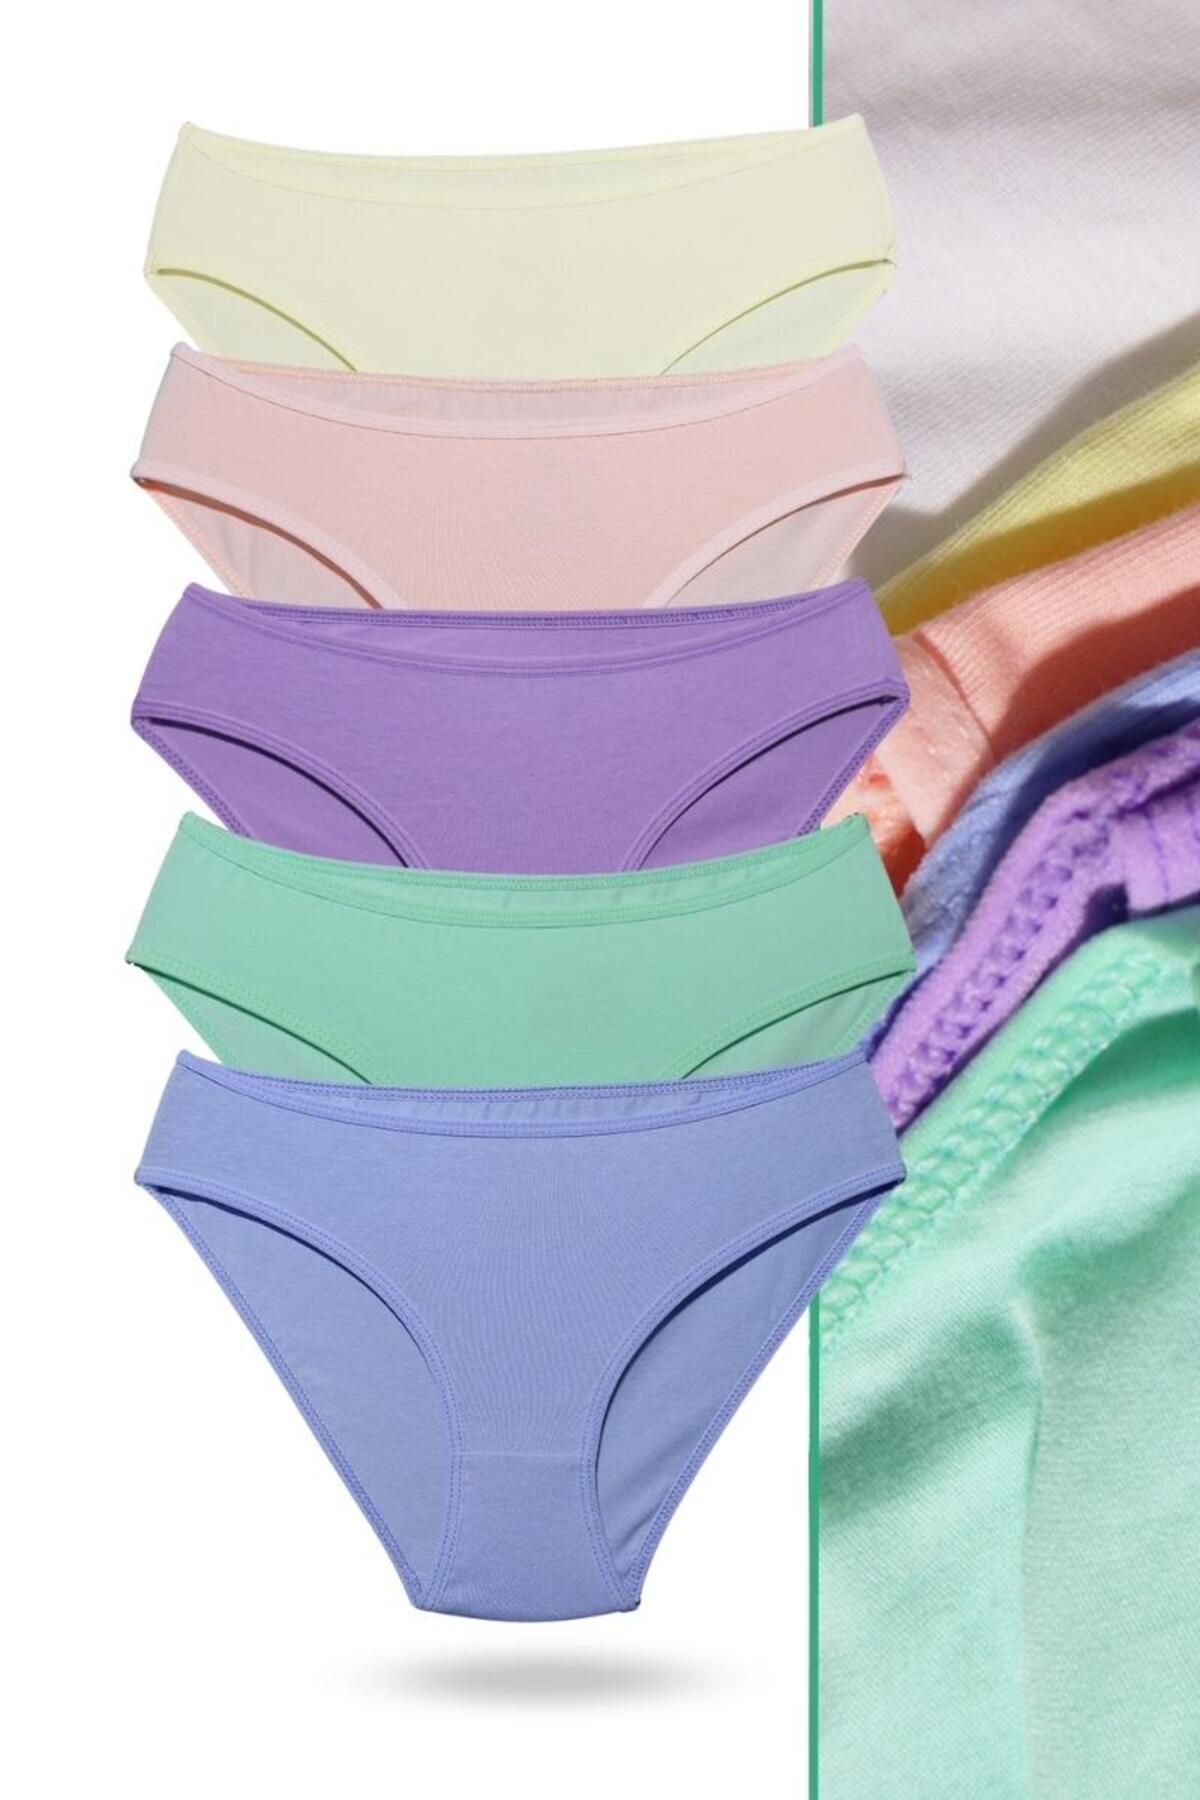 Girls' Fruit of the Loom Cotton Bikini Underwear 10-Pack Multicolor Size 16